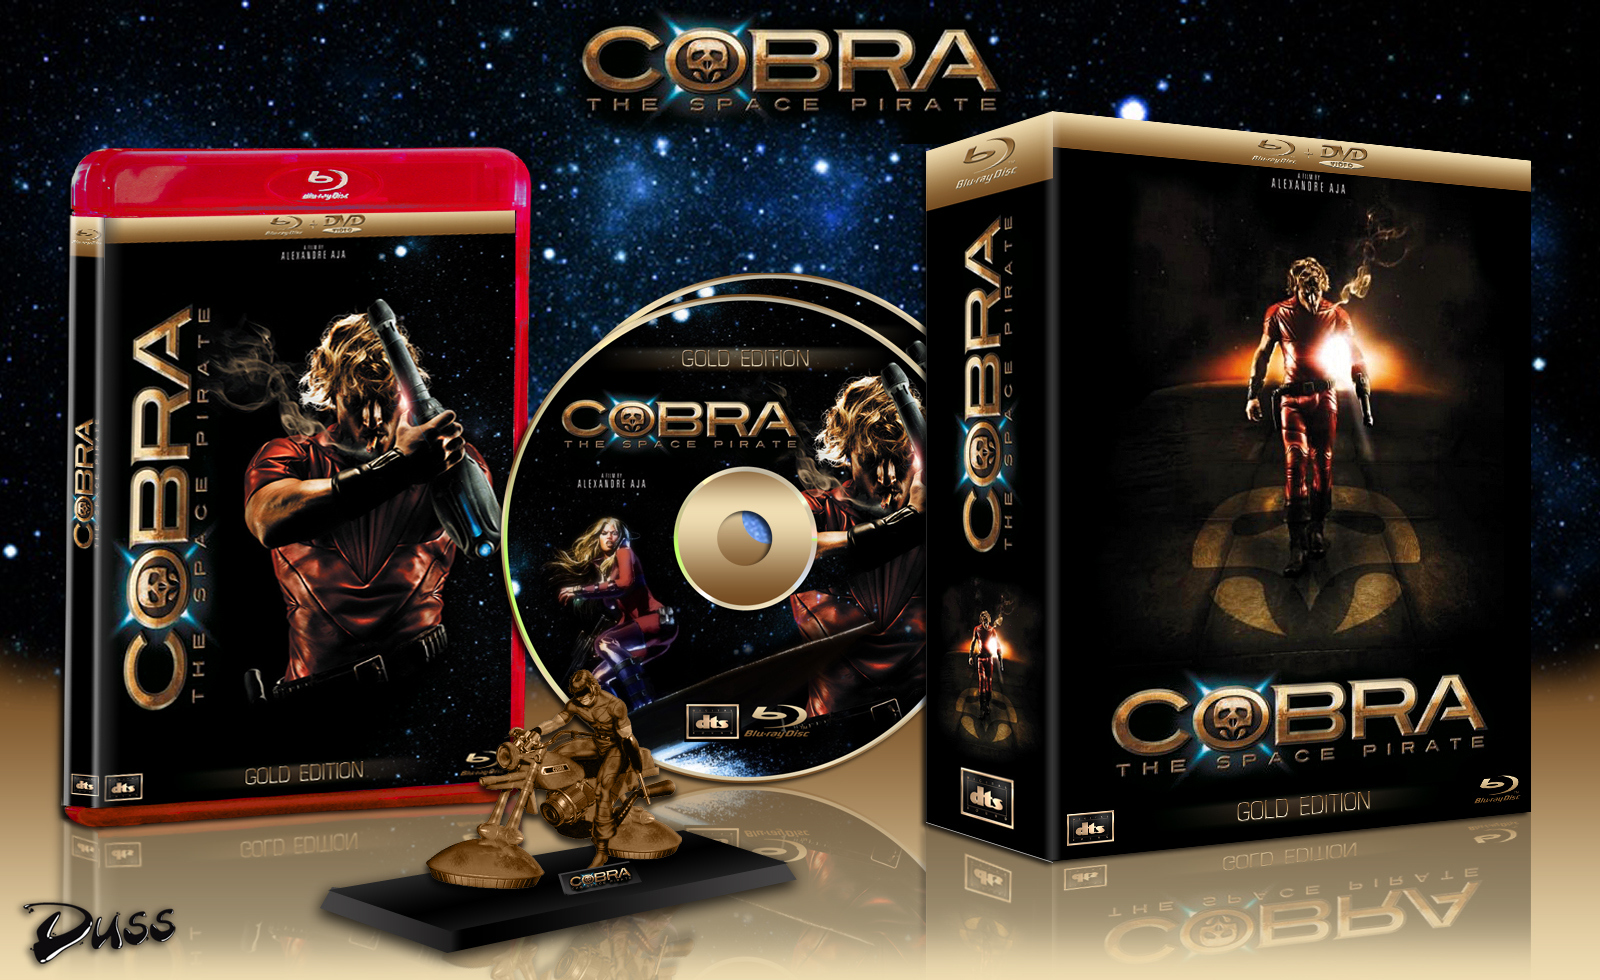 Cobra The Movie box cover